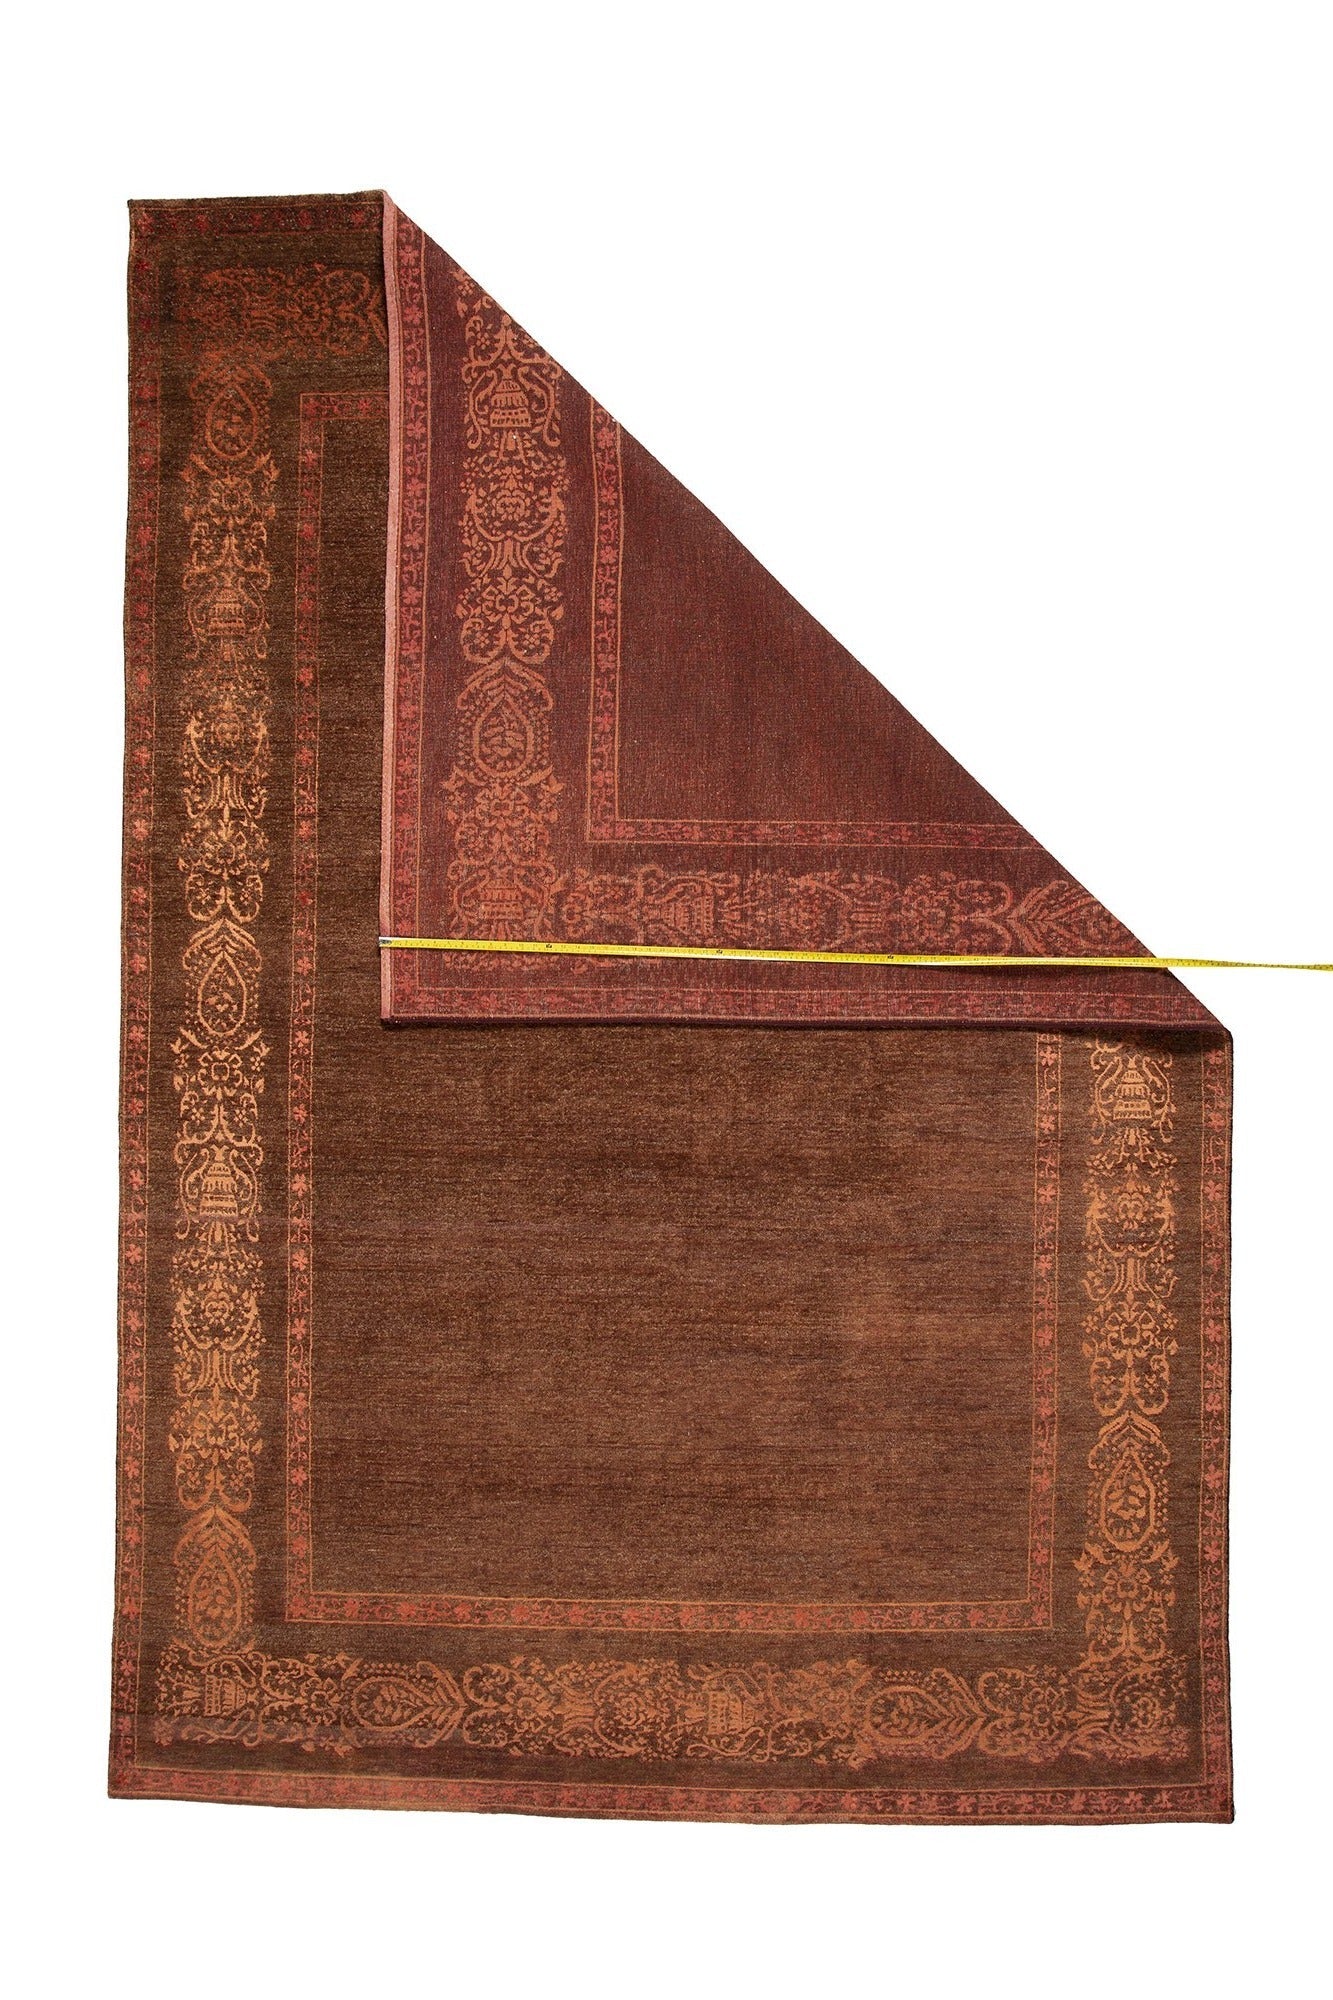 Modern Handmade Indian Carpet product image #27556211654826